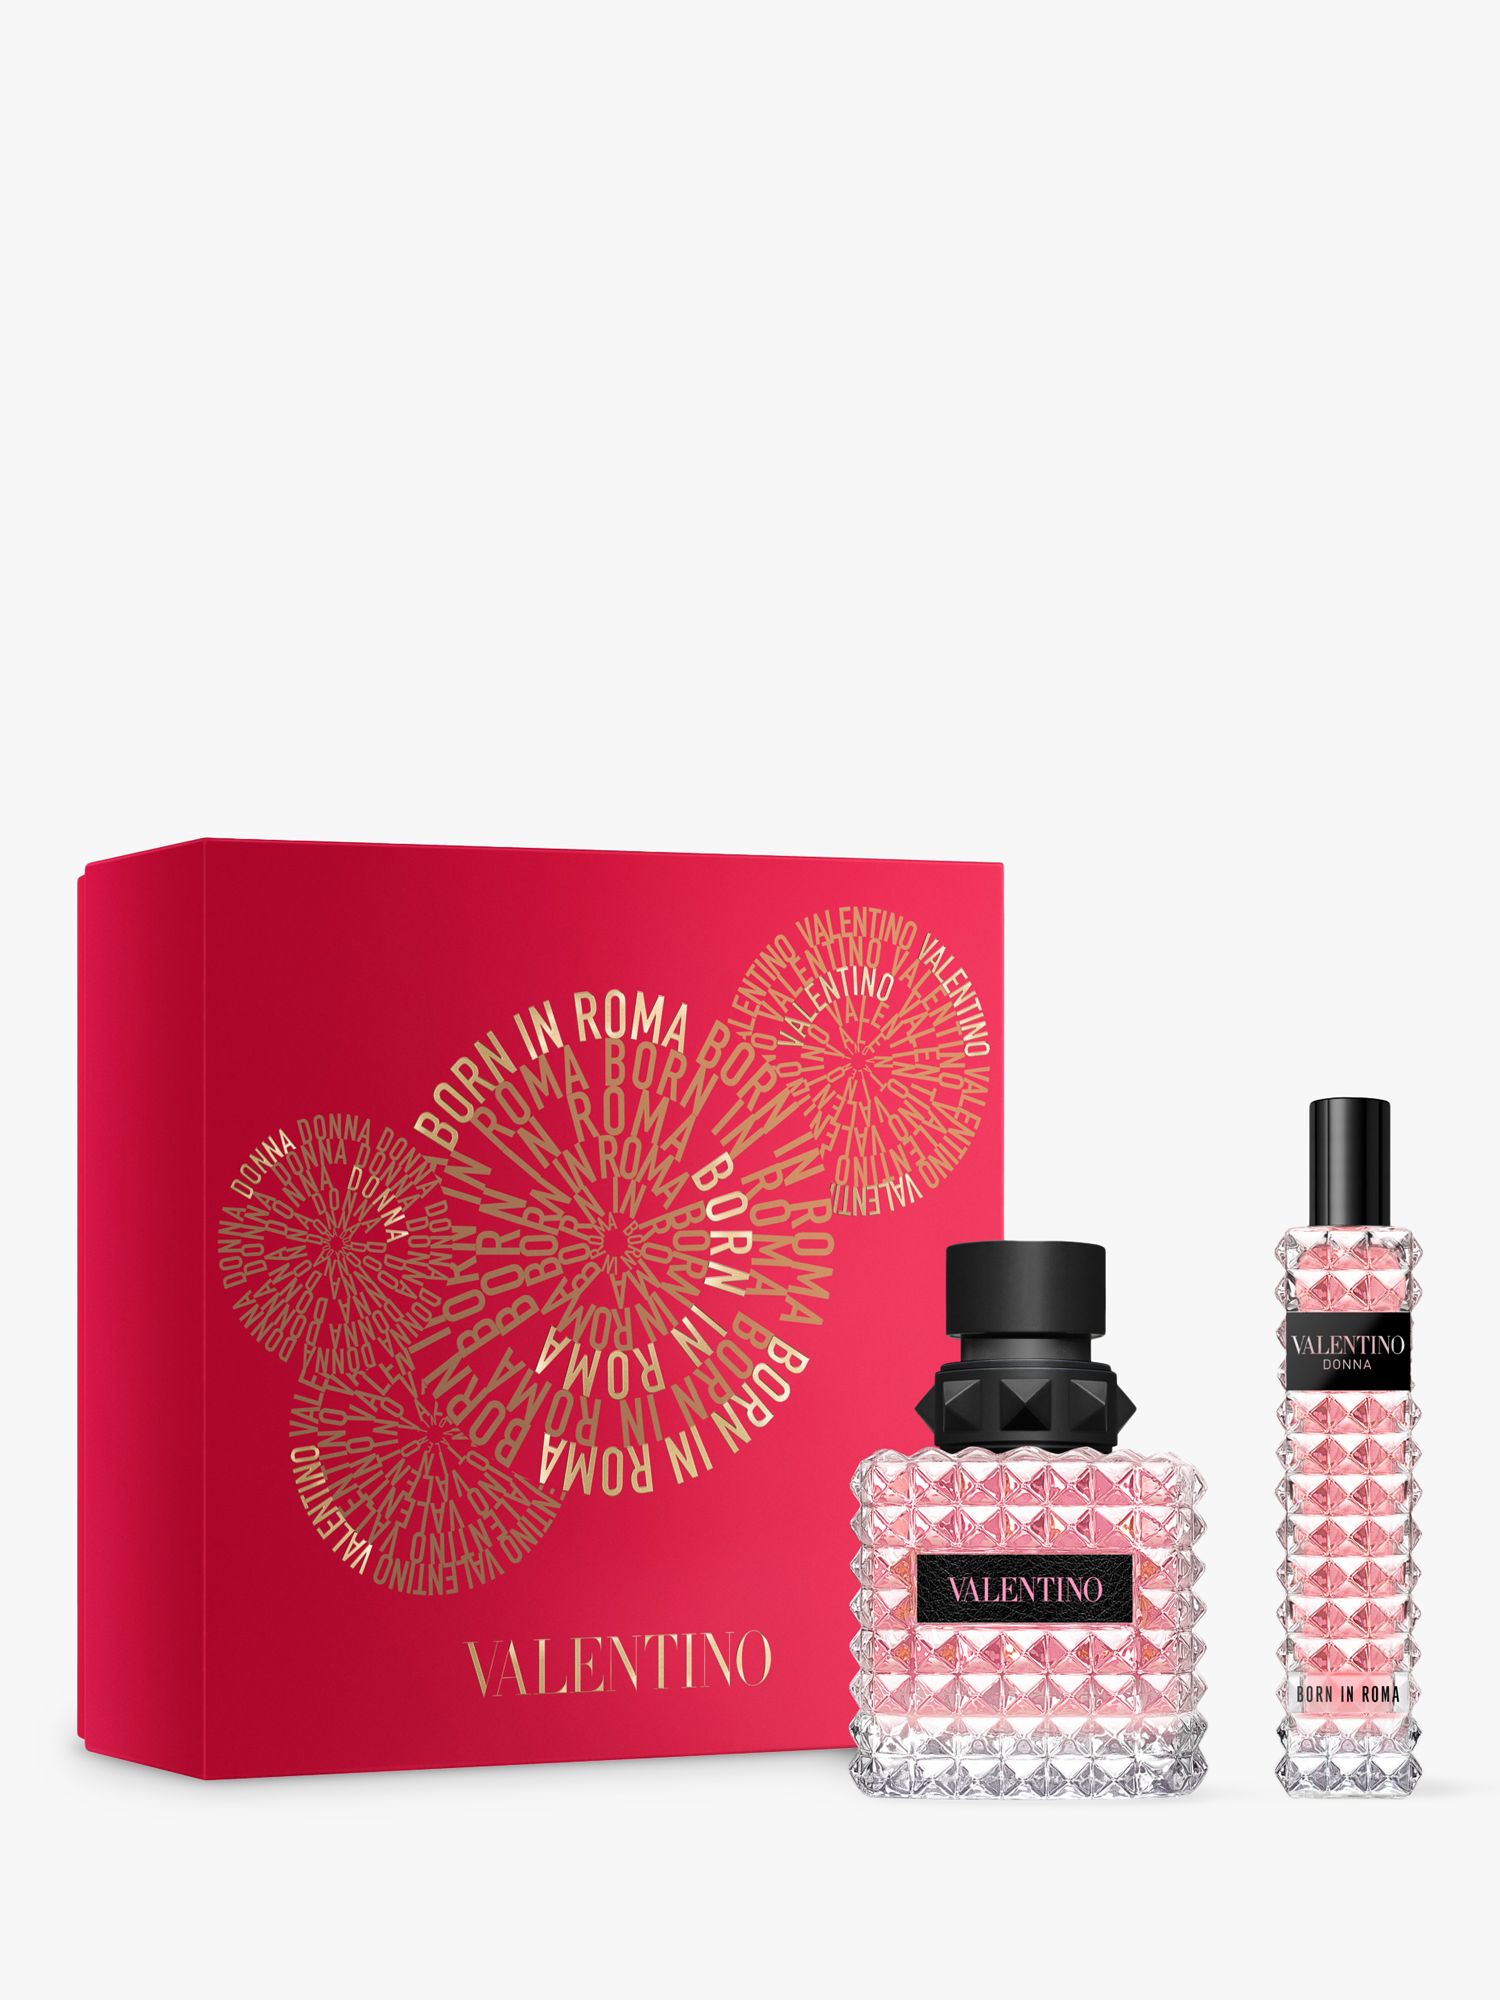 Valentino Born In Roma Donna Eau de Parfum 50ml Fragrance Gift Set